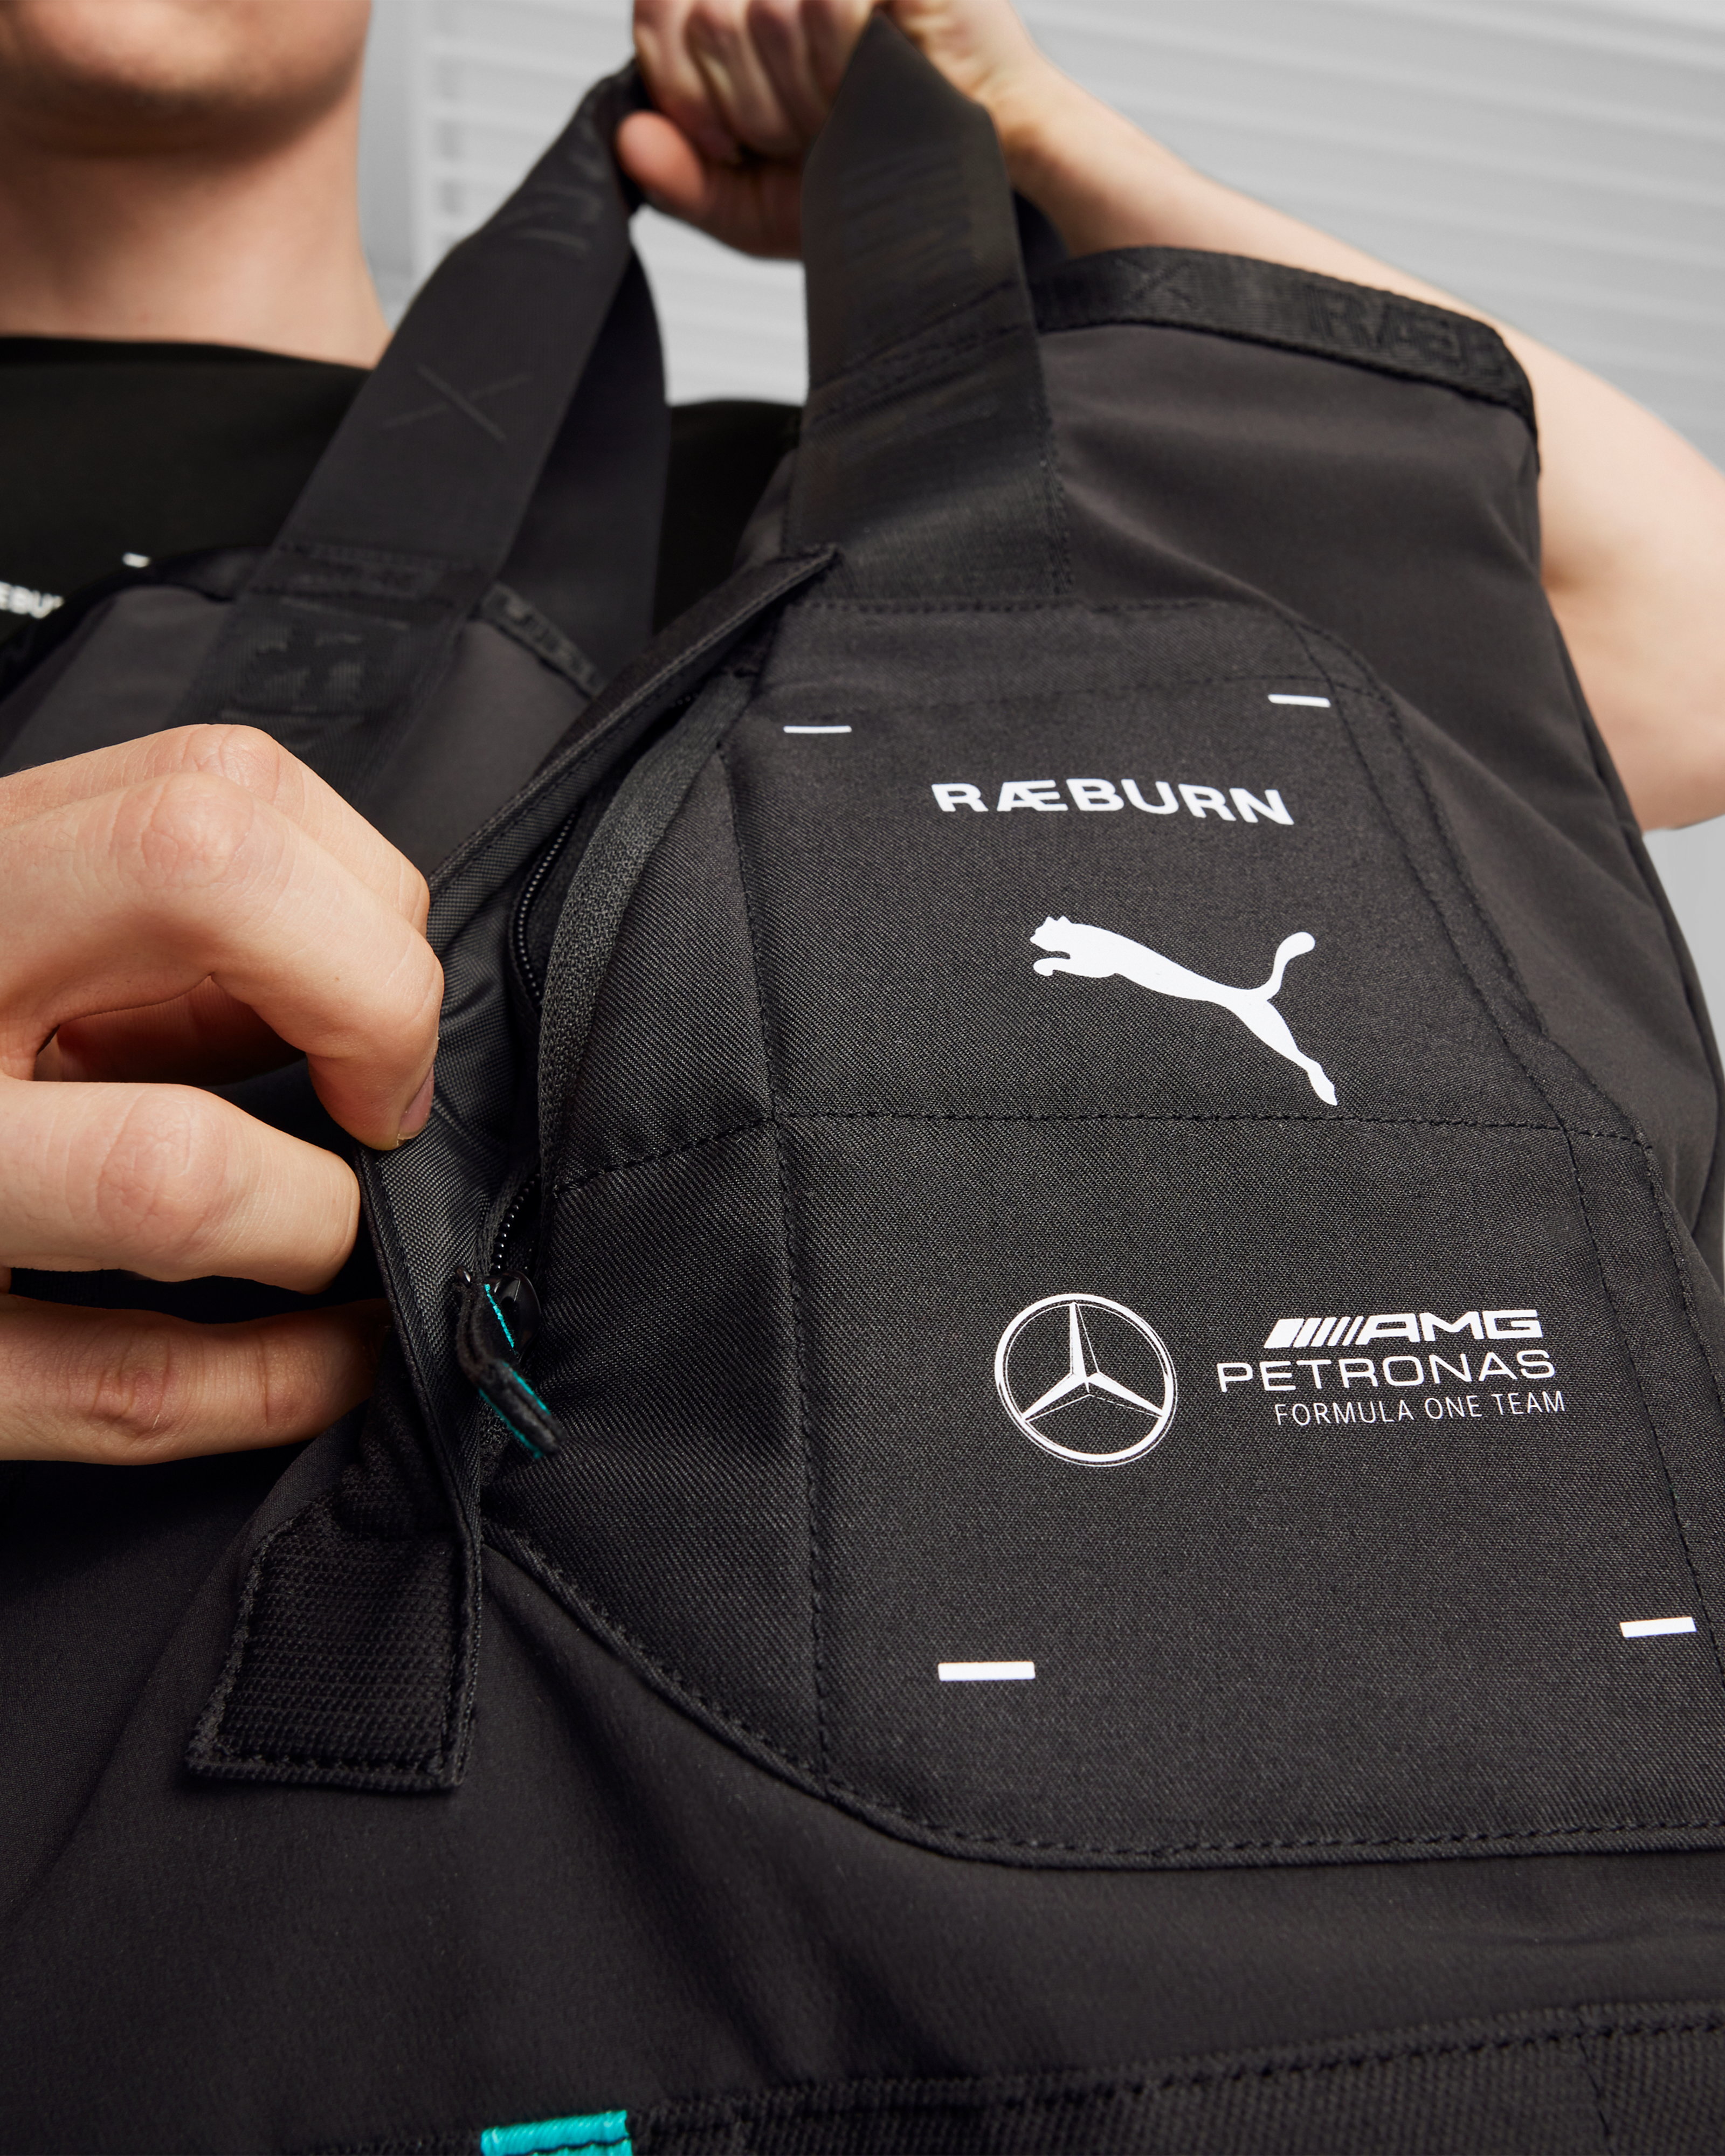 Raeburn x Mercedes-AMG F1 x Puma Tote Bag Black